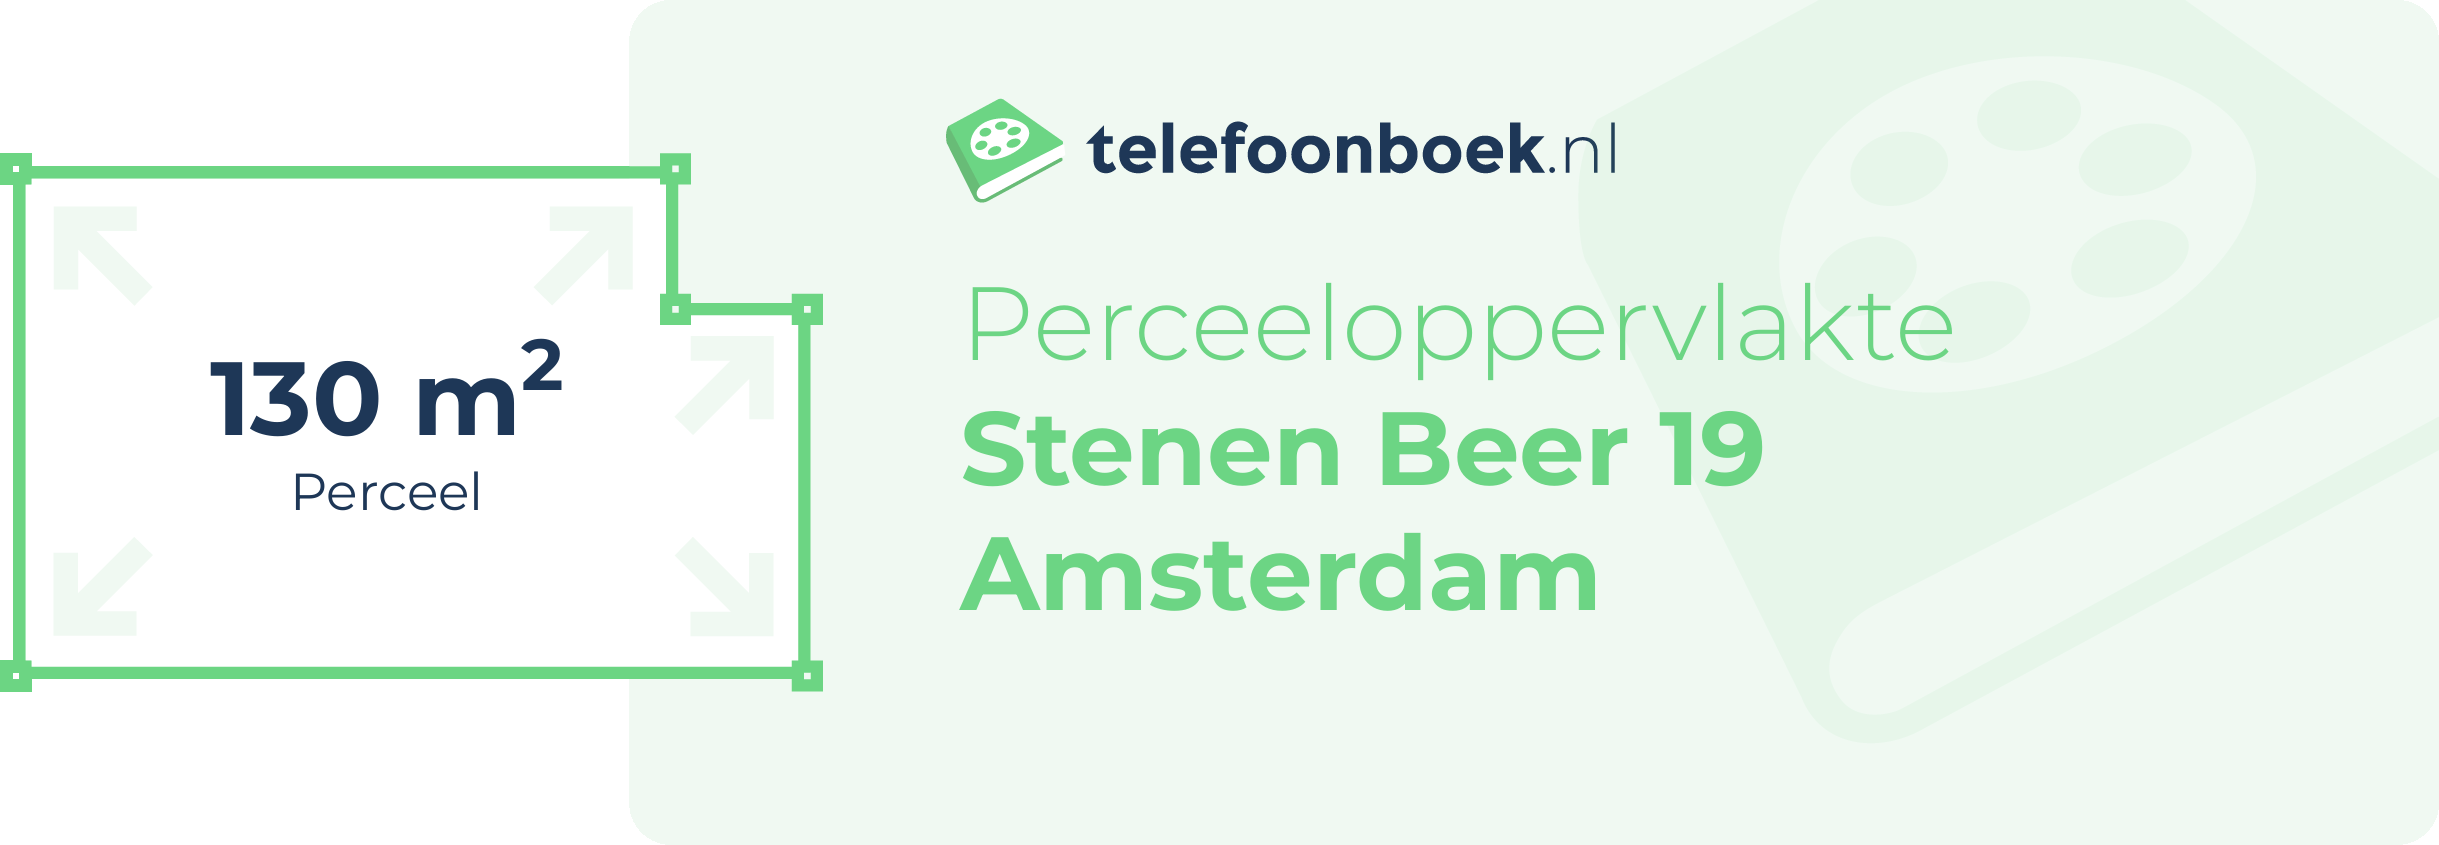 Perceeloppervlakte Stenen Beer 19 Amsterdam